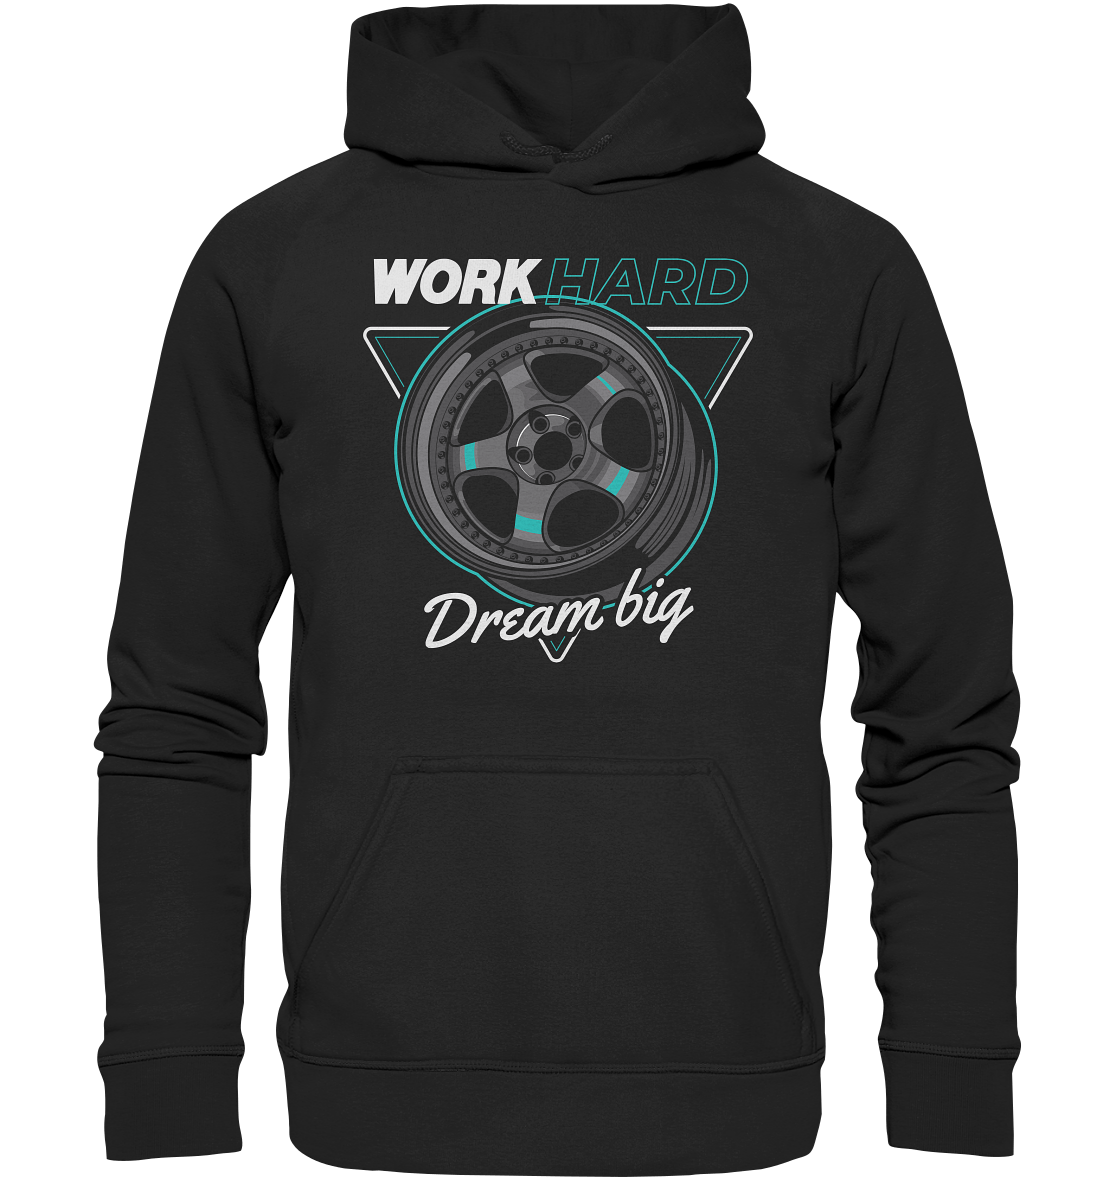 WORK hard - Basic Unisex Hoodie - MotoMerch.de